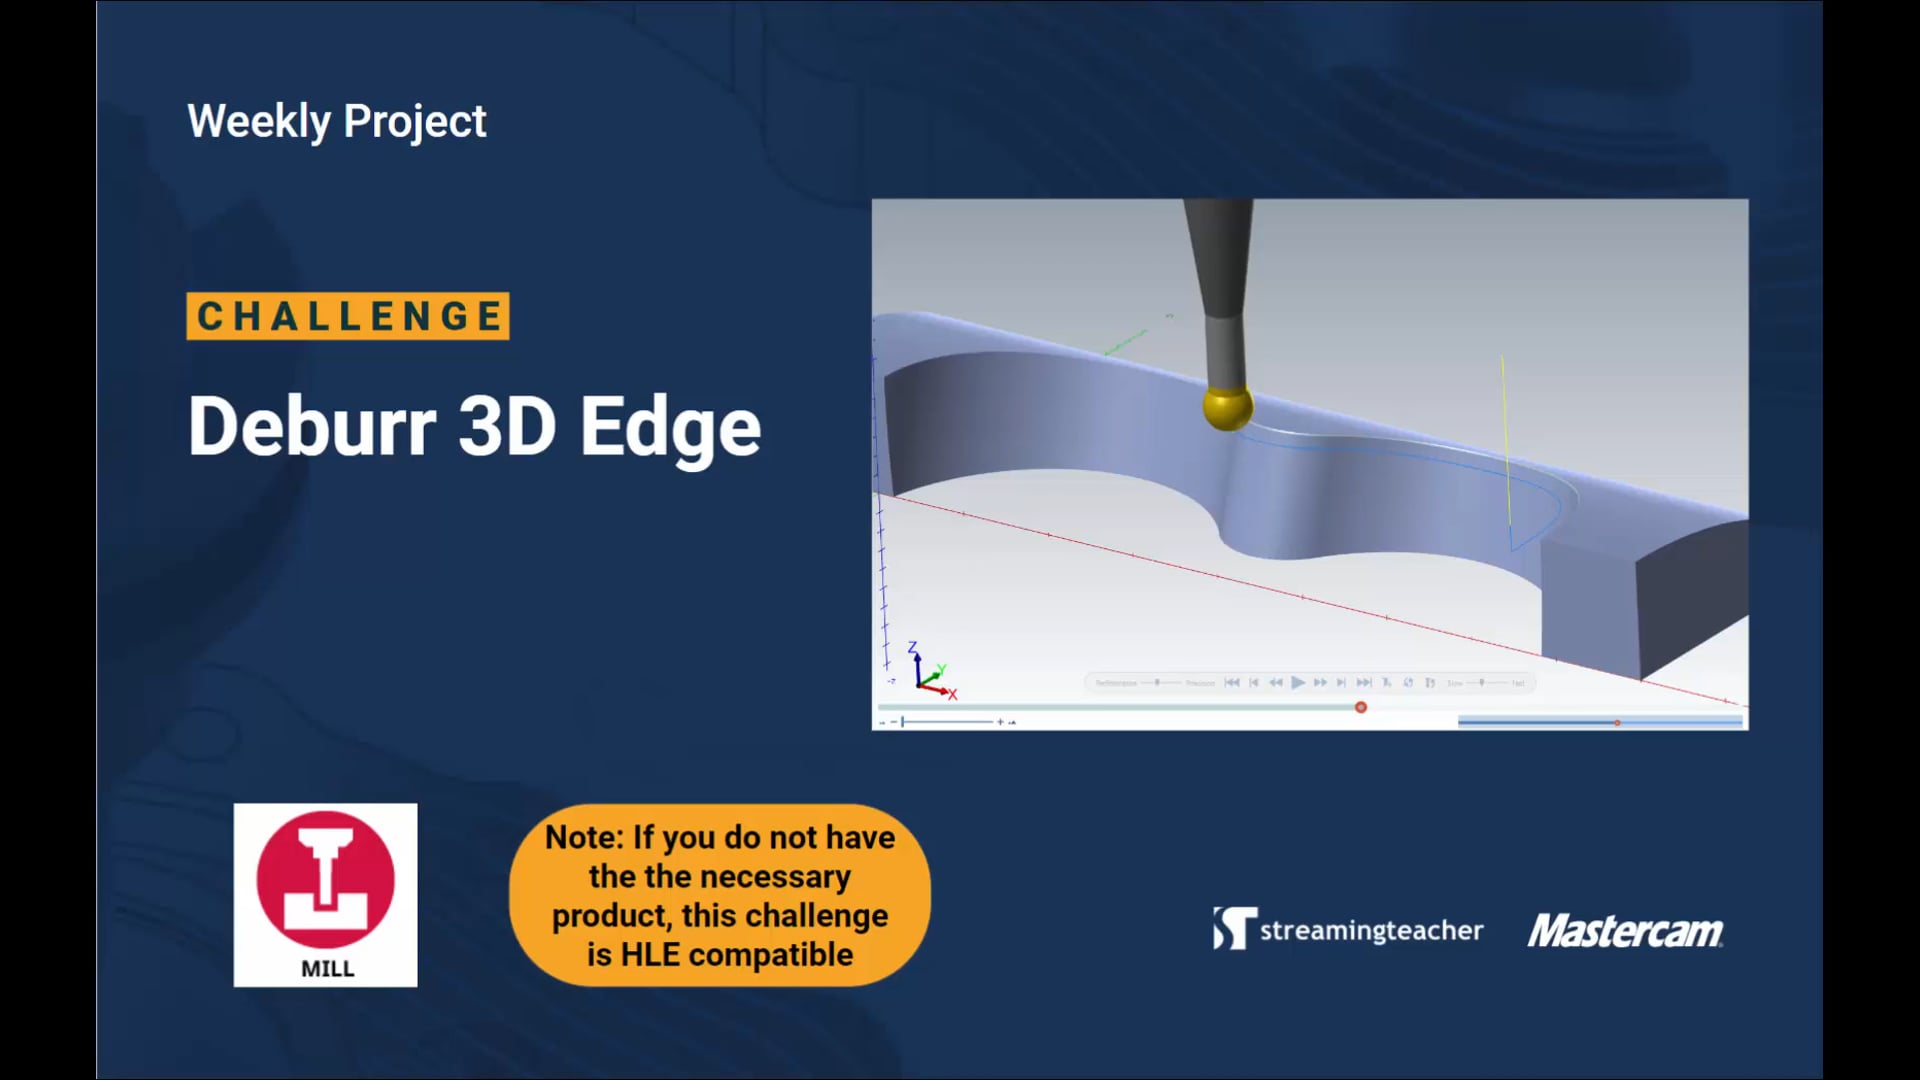 Deburr 3D Edge